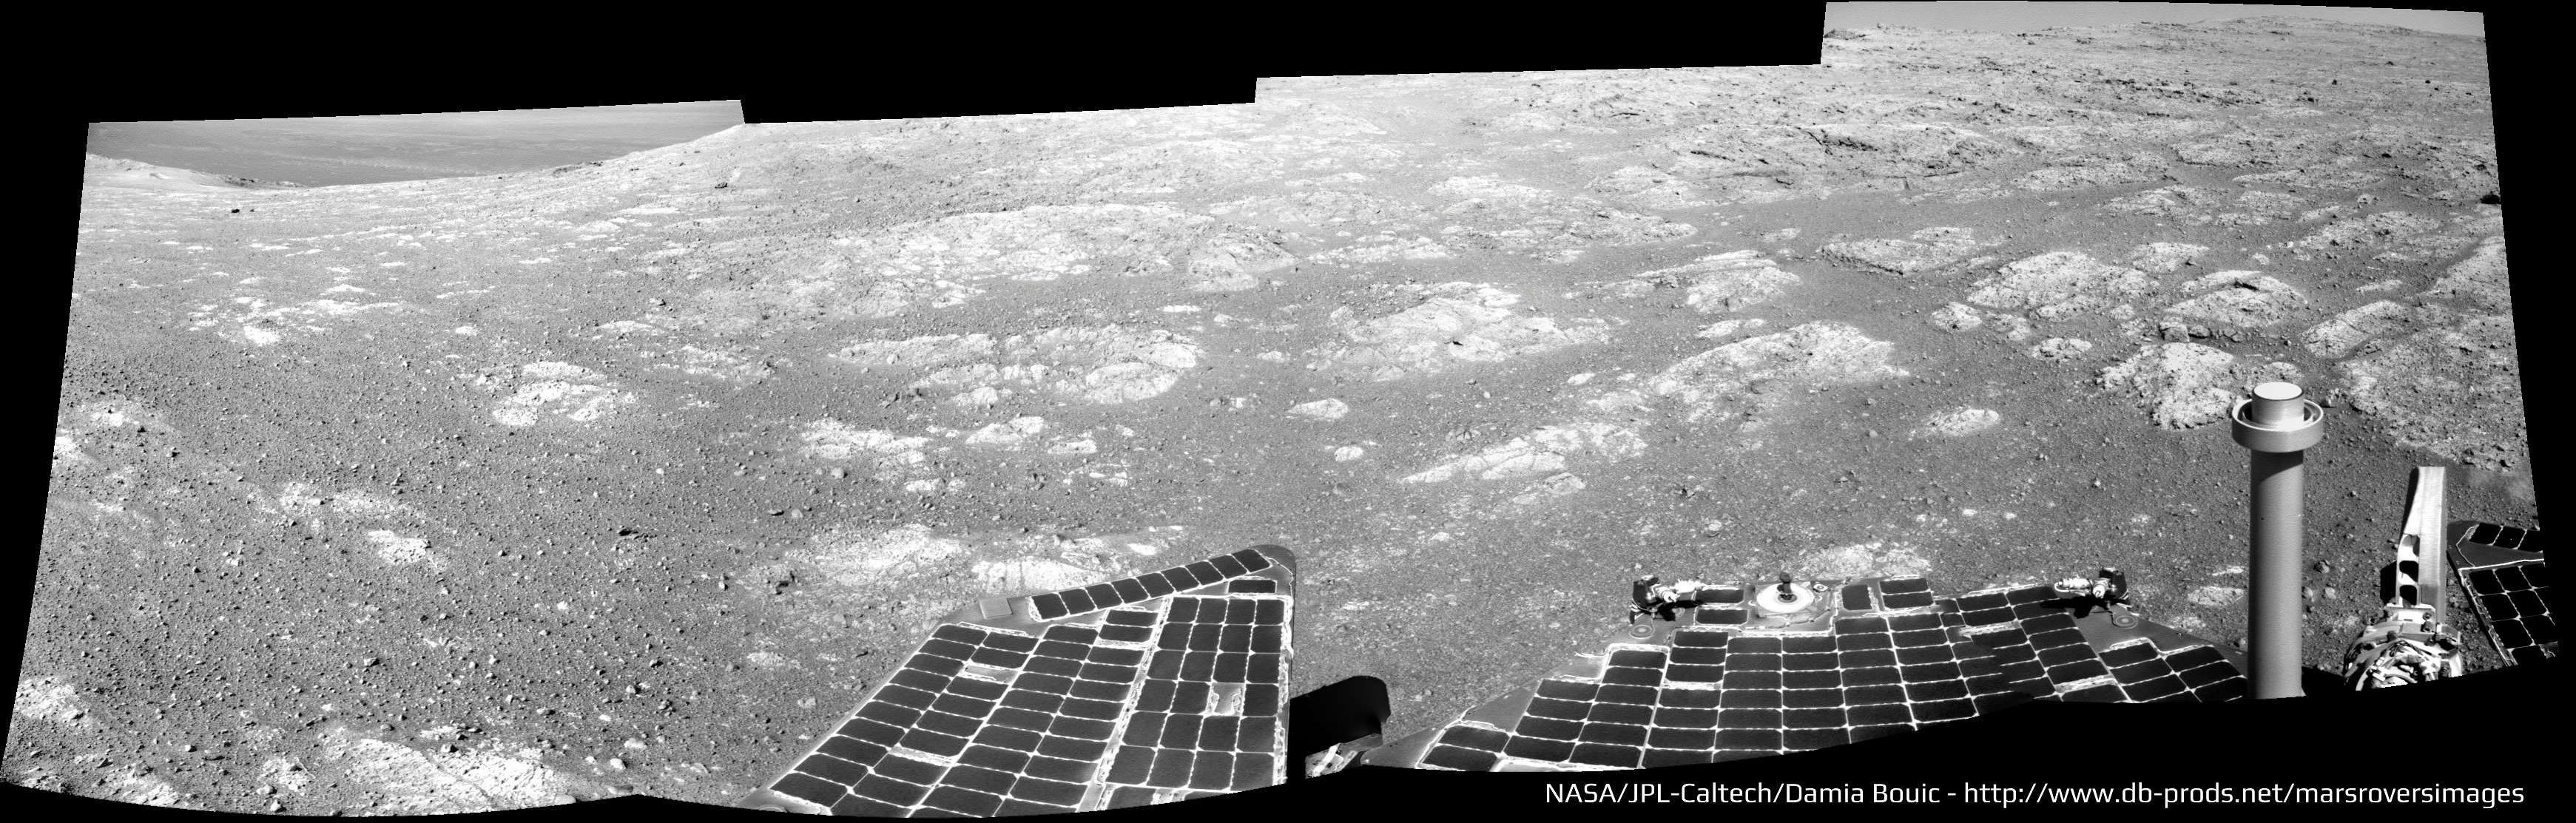 MARS: S putovanja rovera OPPORTUNITY  Sol3653_pano